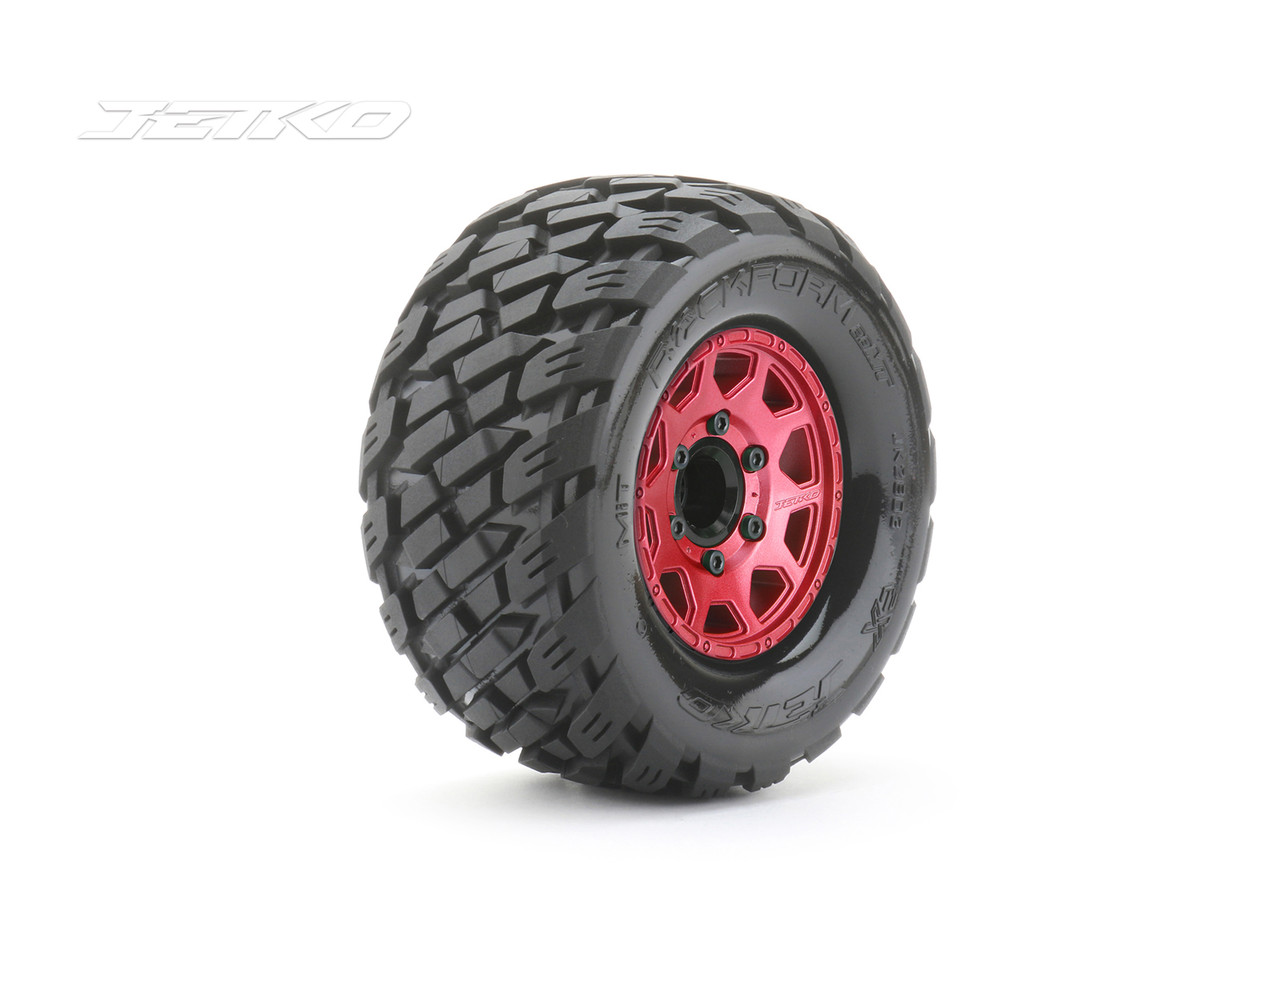 Jetko 1/10 MT 2.8 EX-Rockform Tires Mounted on Red Claw Rims, Medium Soft, Glued, 14mm, for Arrma